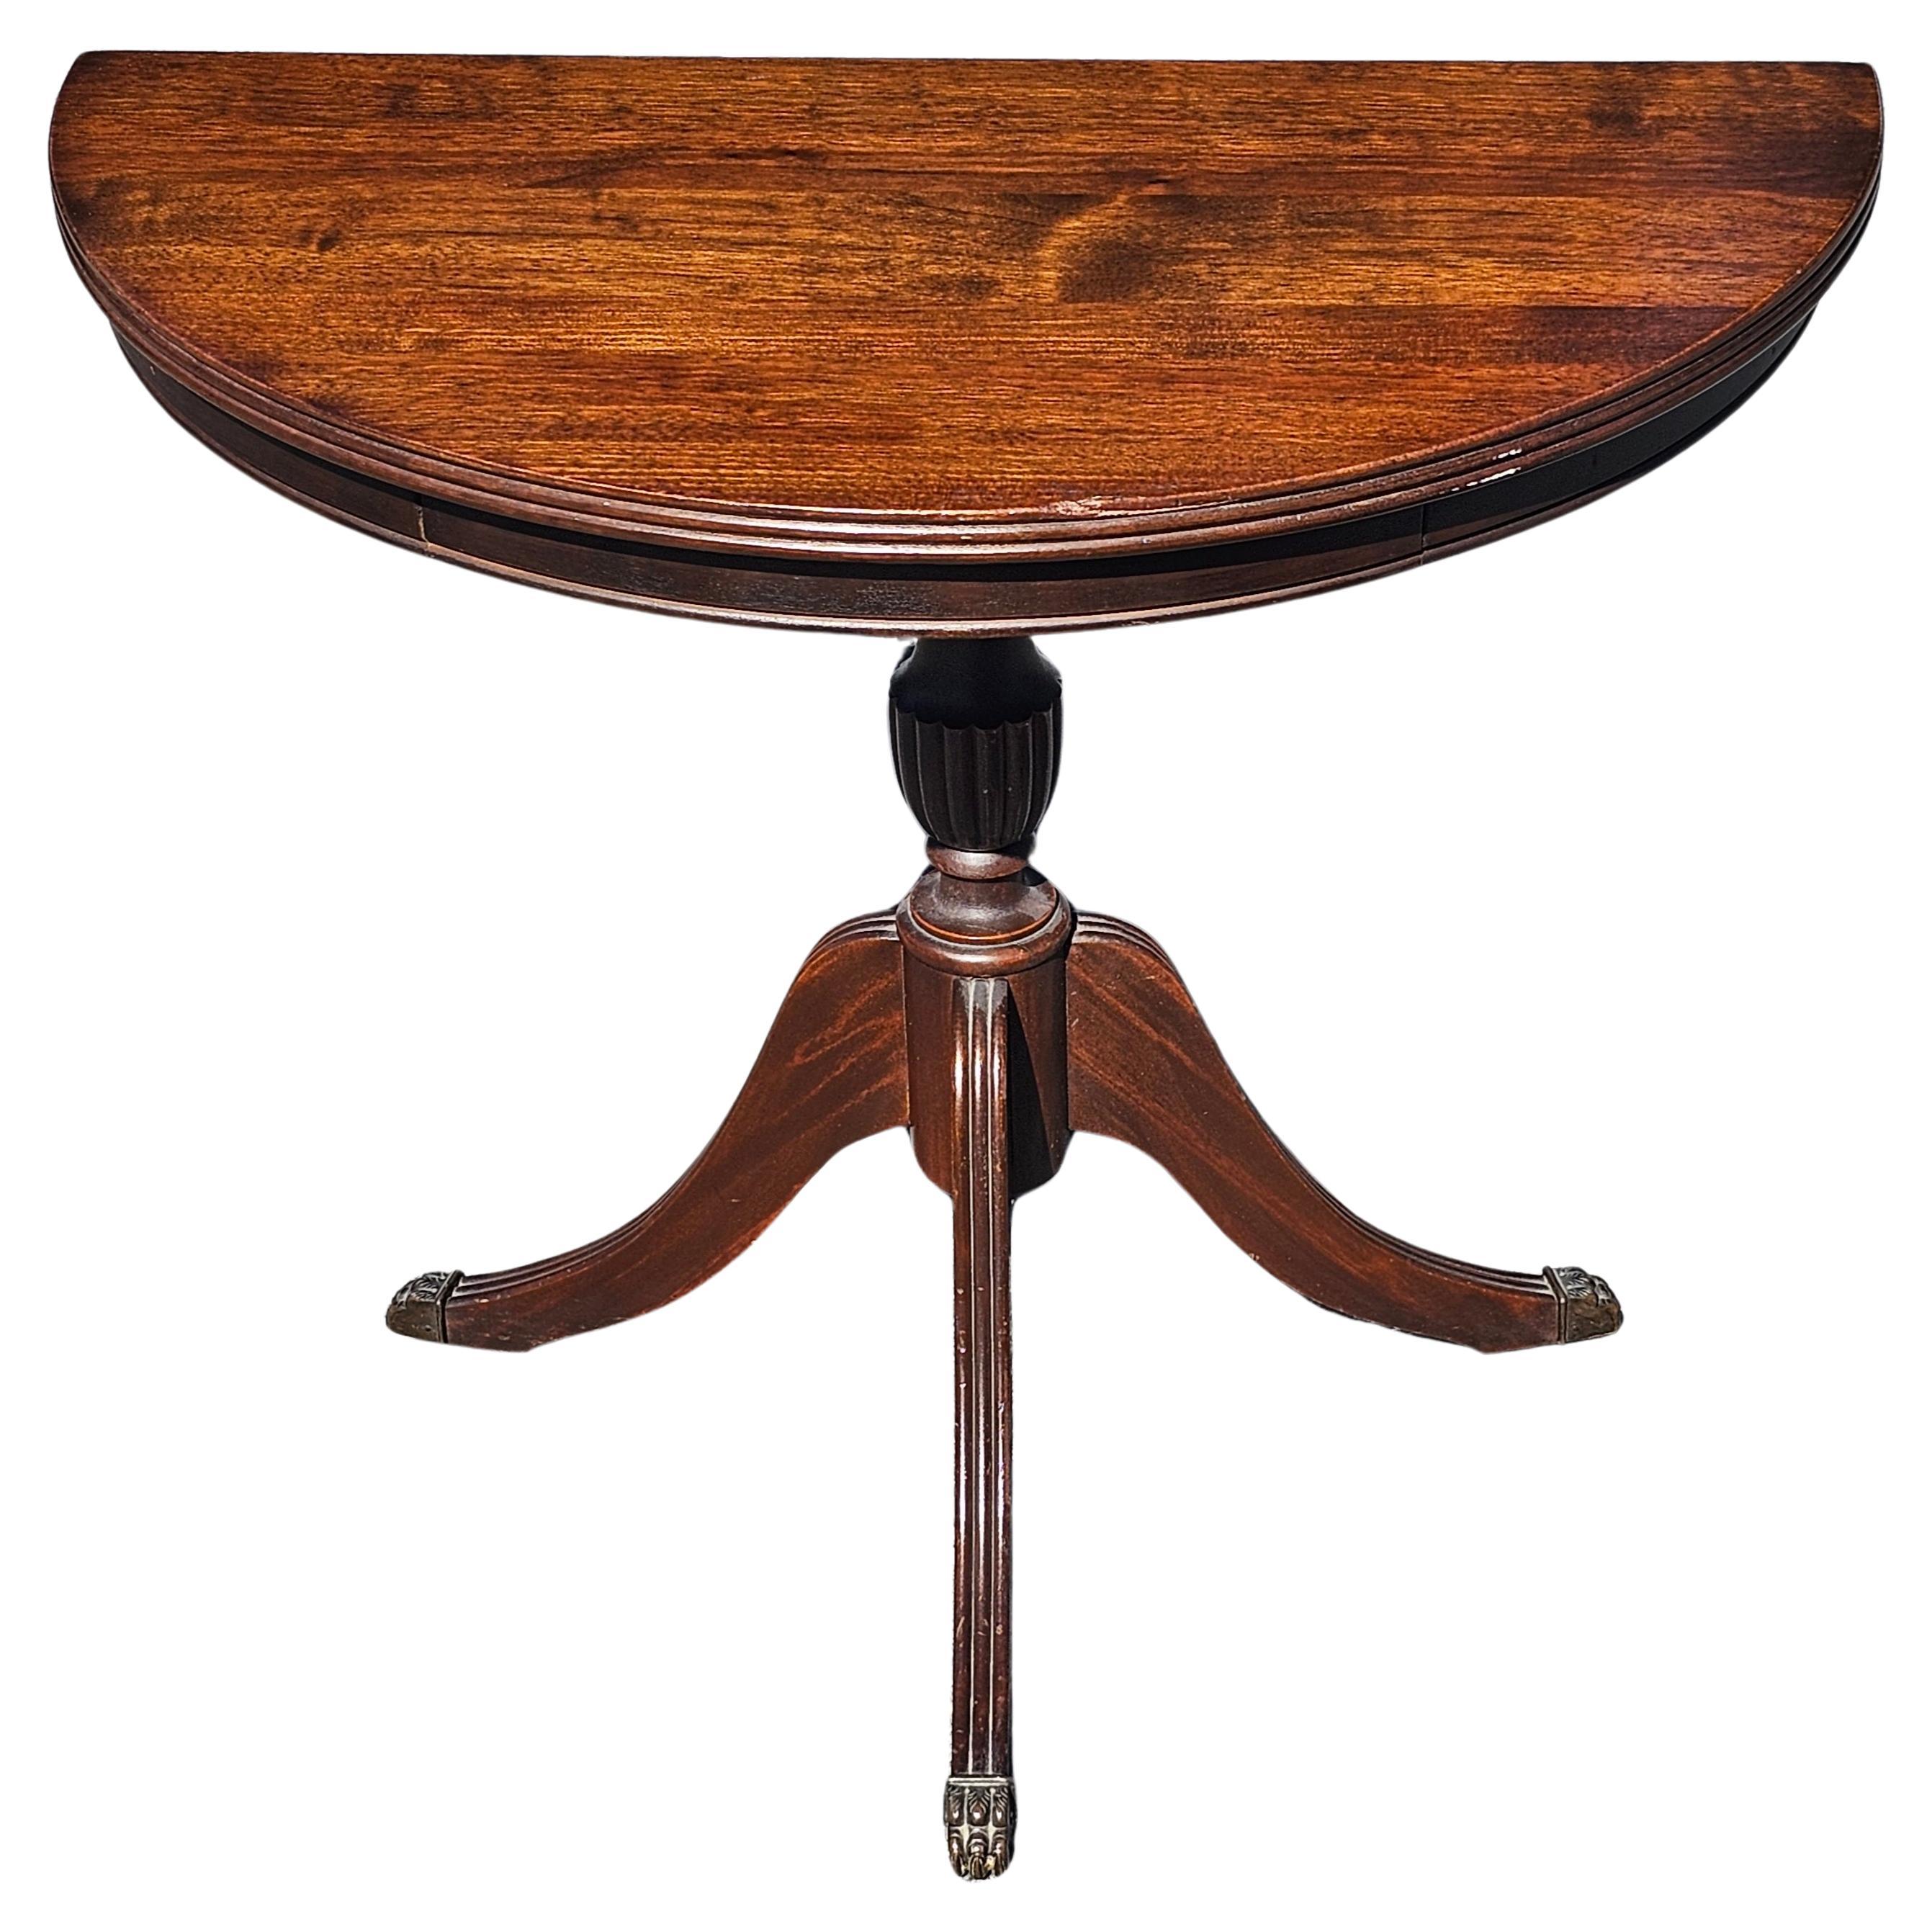 Early 20th Century Federal Mahogany Pedestal Trifid Demilune Table